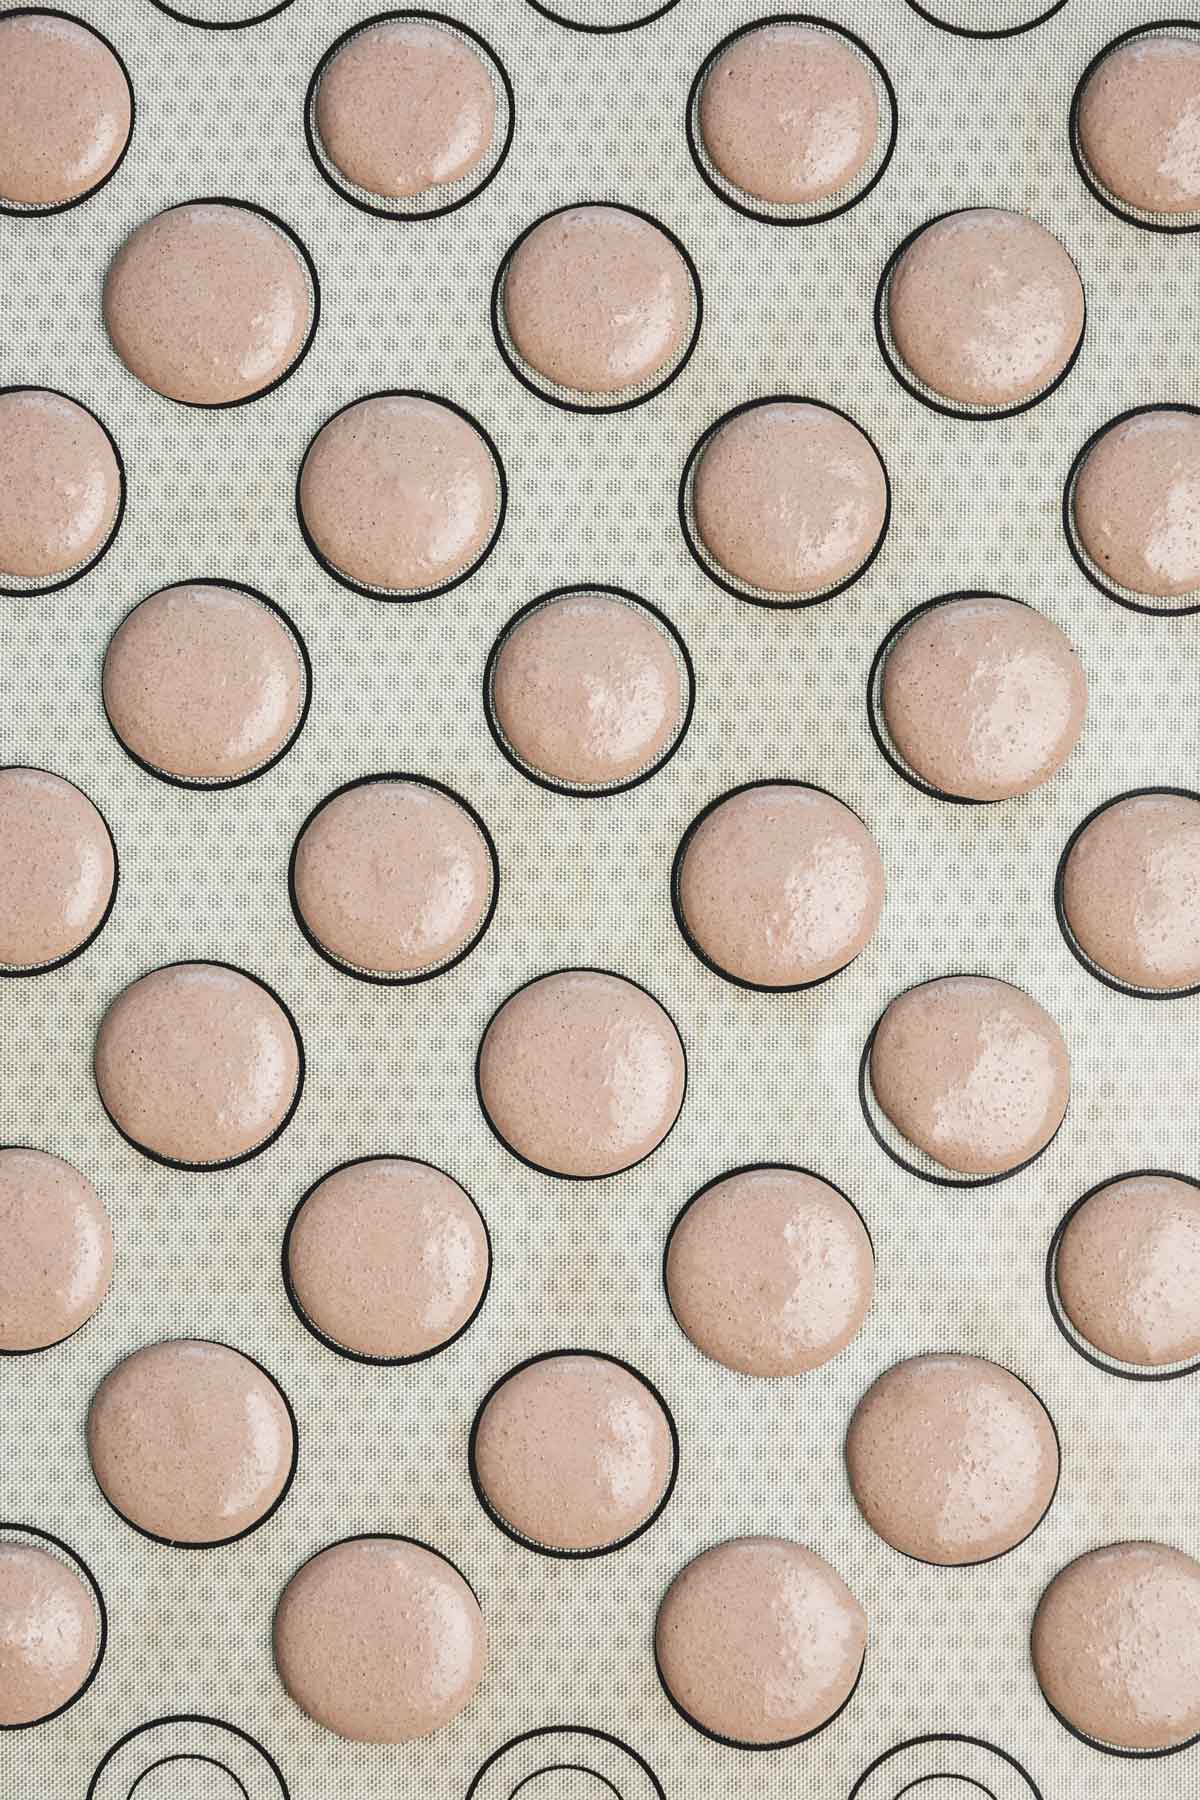 coques de macarons au chocolat 